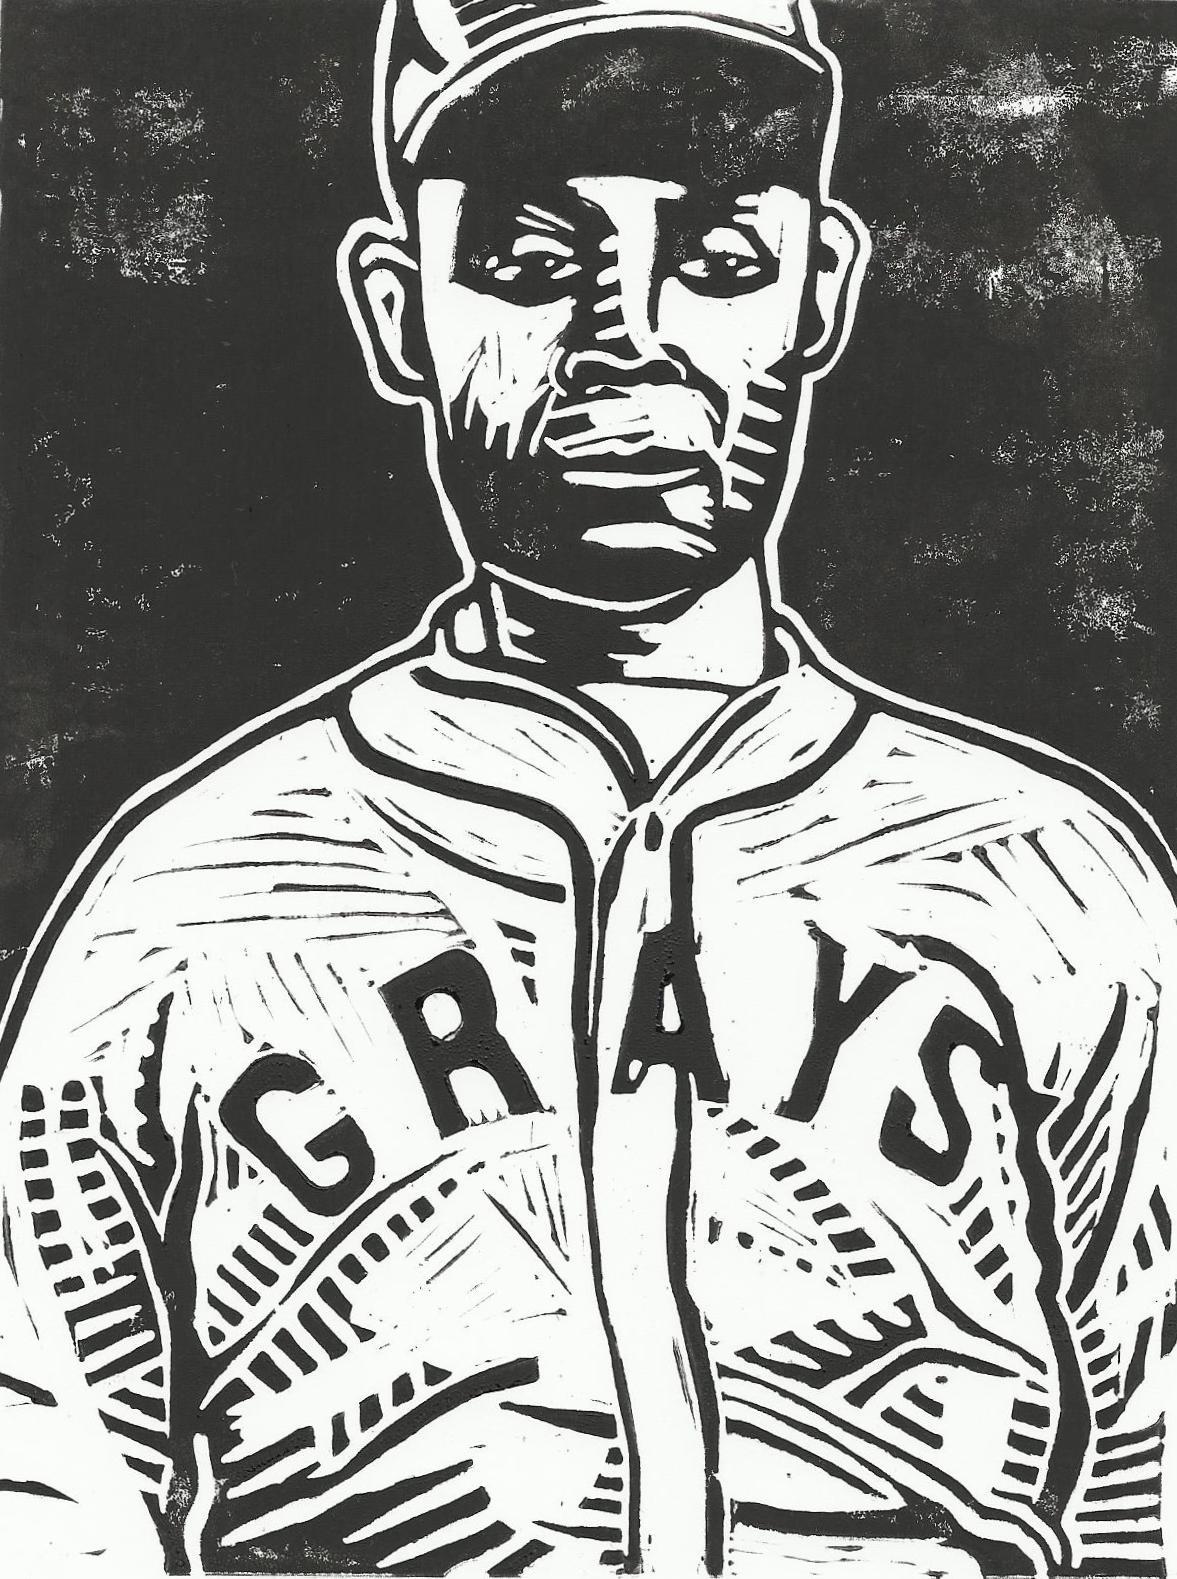 Oscar Charleston. A Hall of Fame baseball player. Lino-cut.